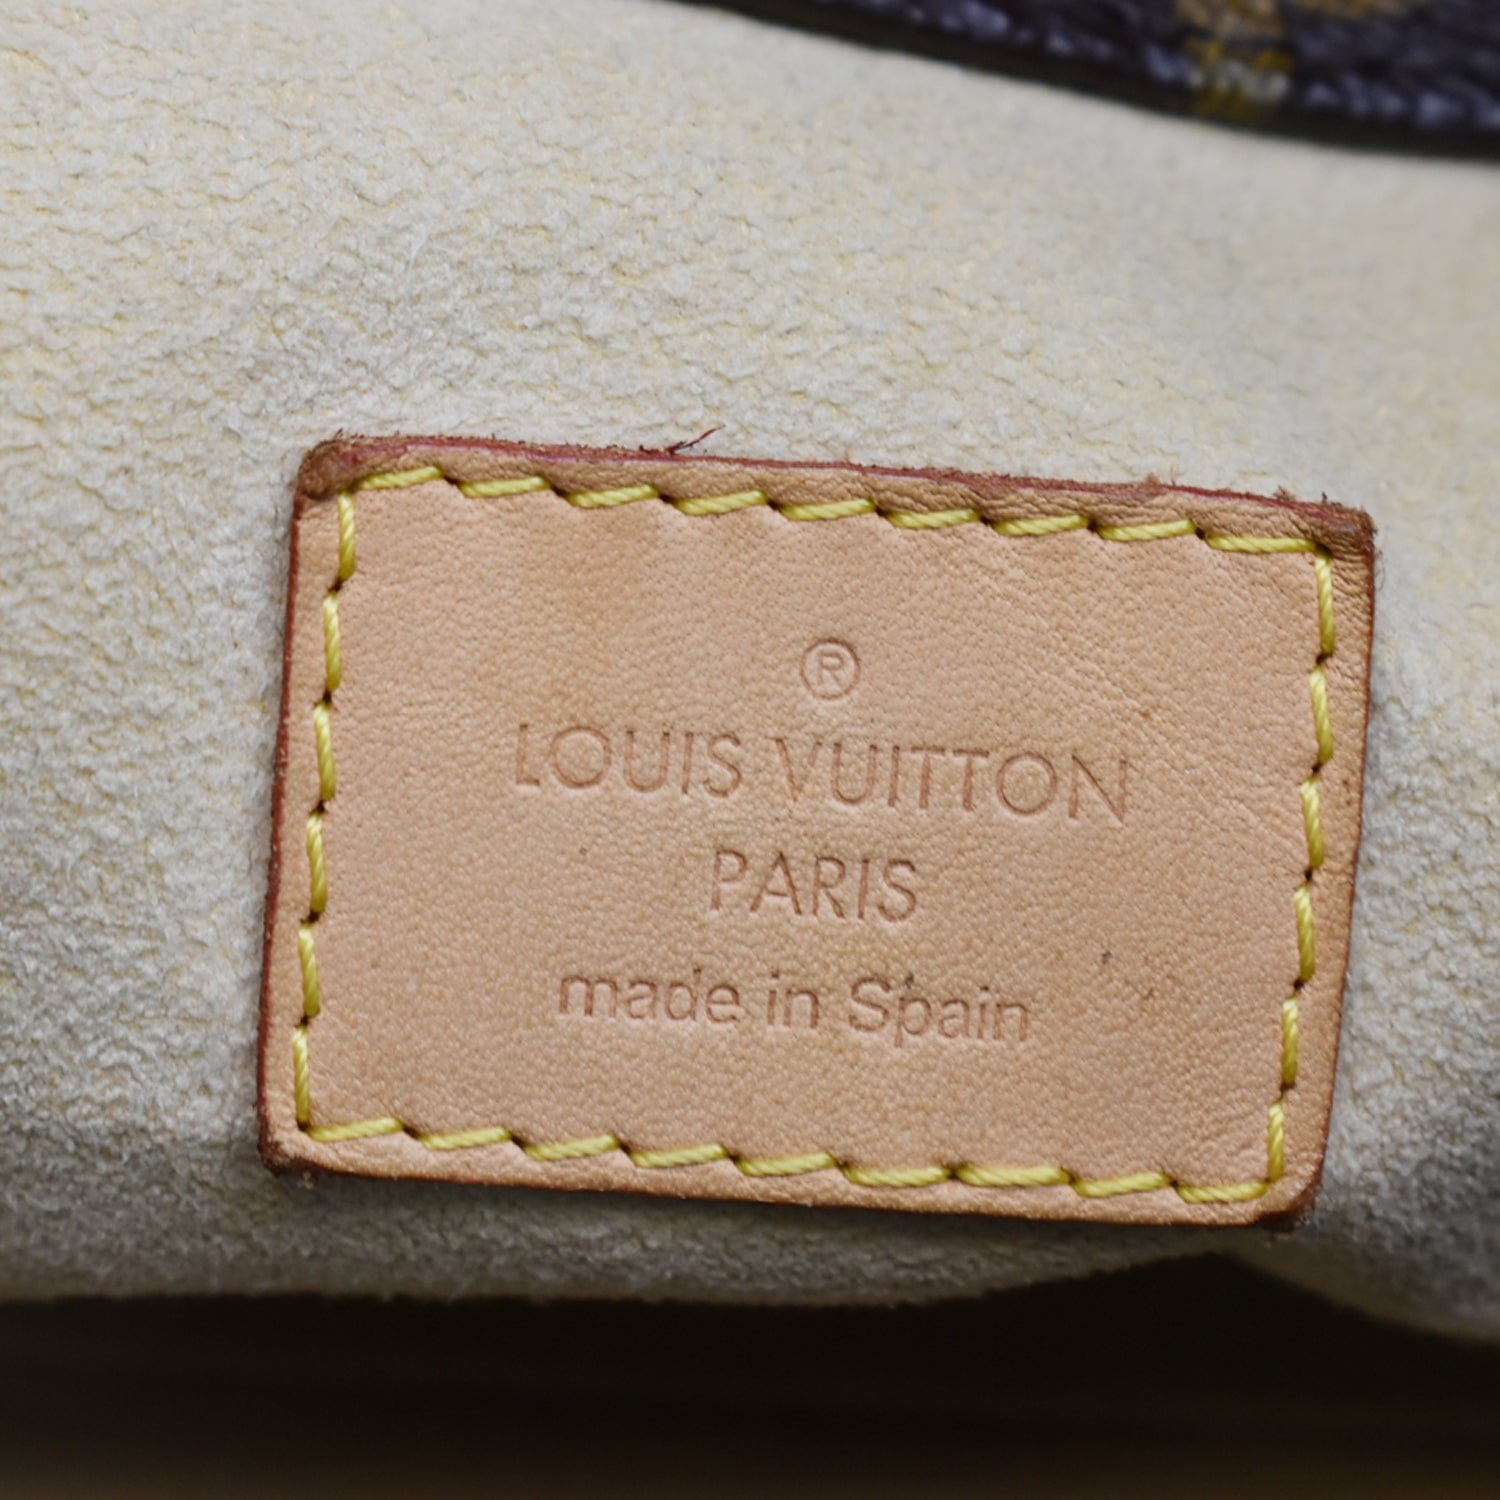 Brown Louis Vuitton Monogram Artsy MM Hobo Bag – Designer Revival